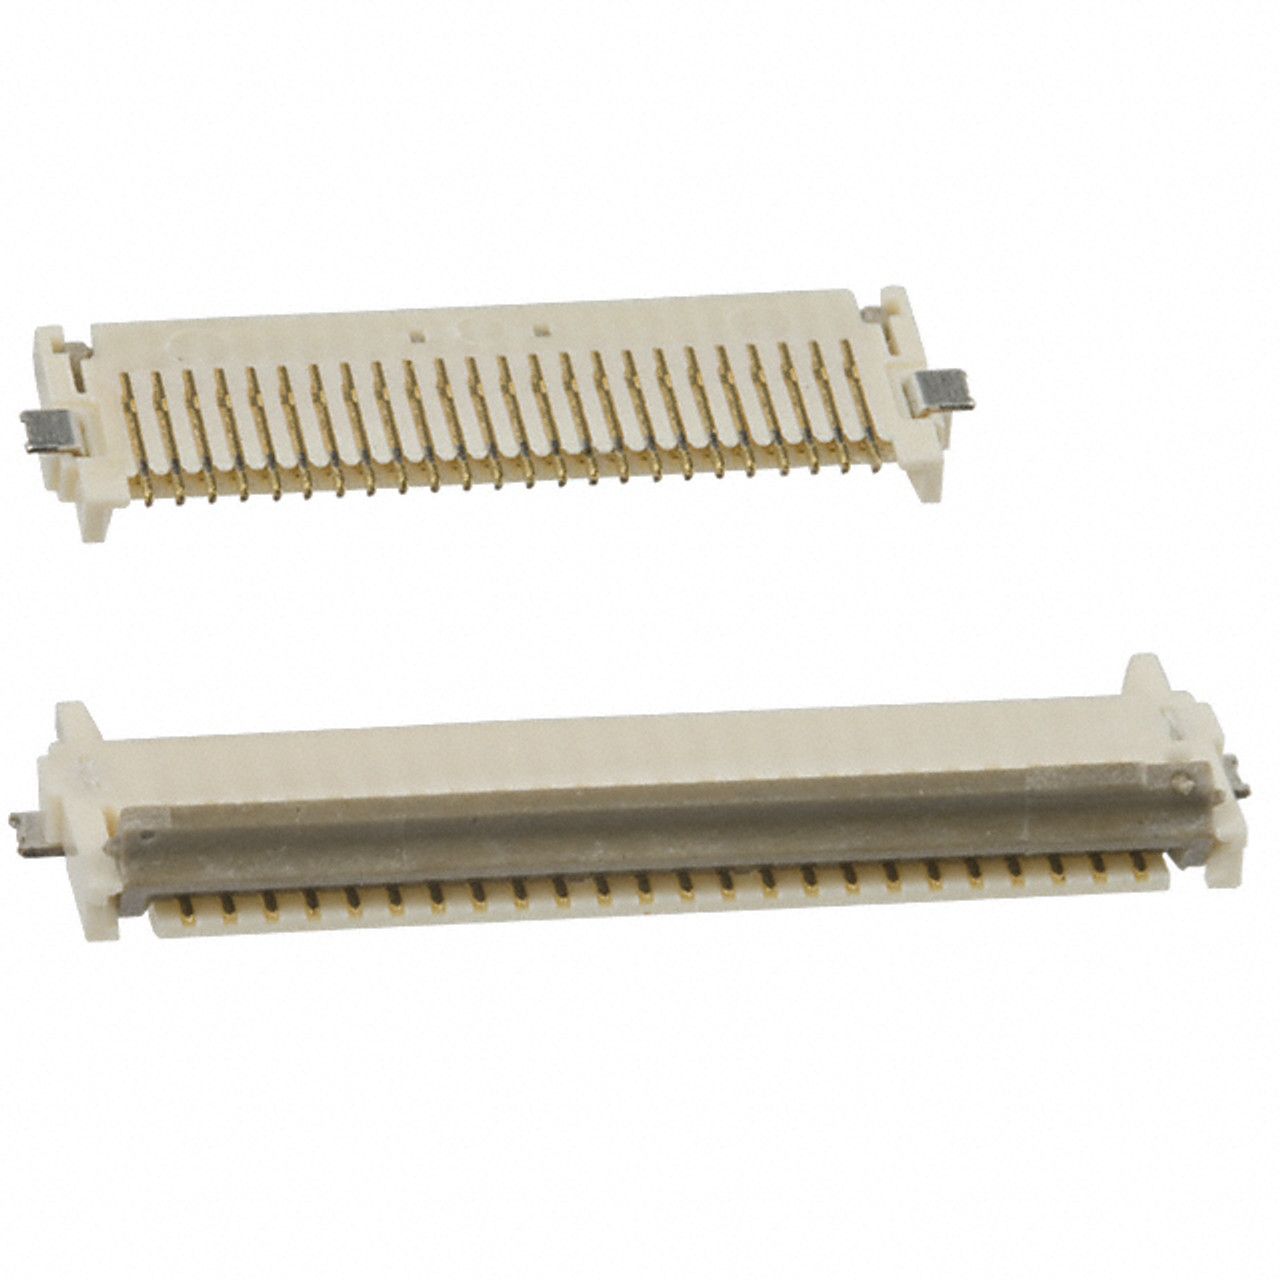 Omron XF2R-2415-4A FFC, FPC (Flat Flexible) Connectors